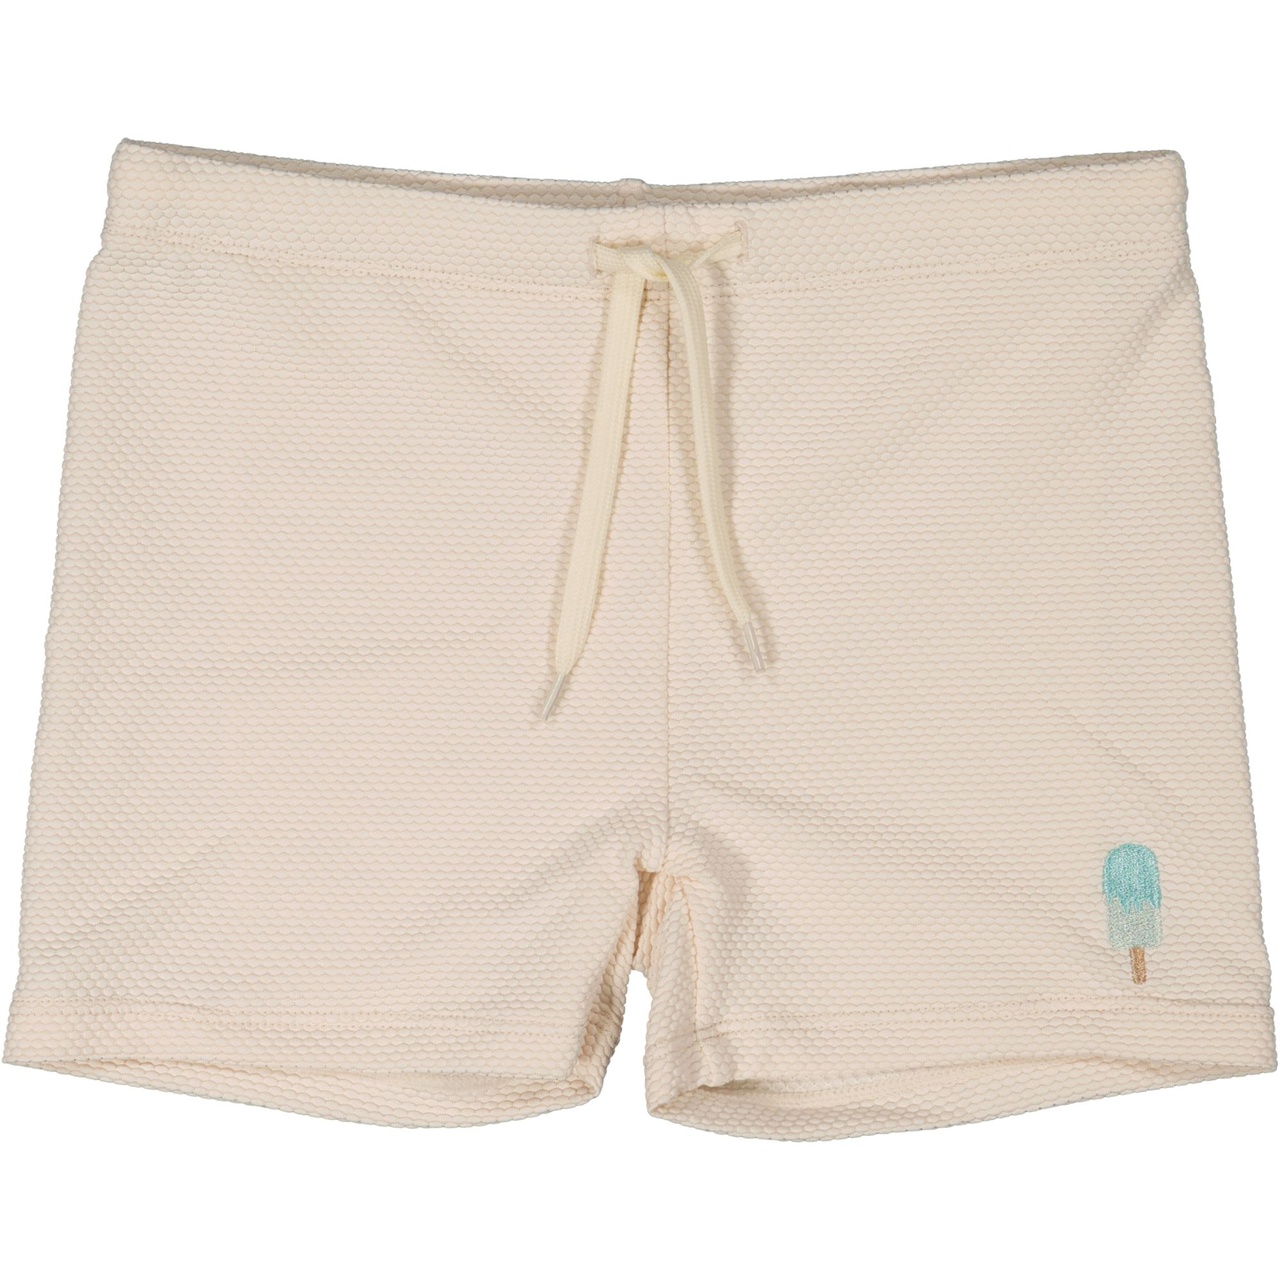 UV-Short pant Soft beige  86/92